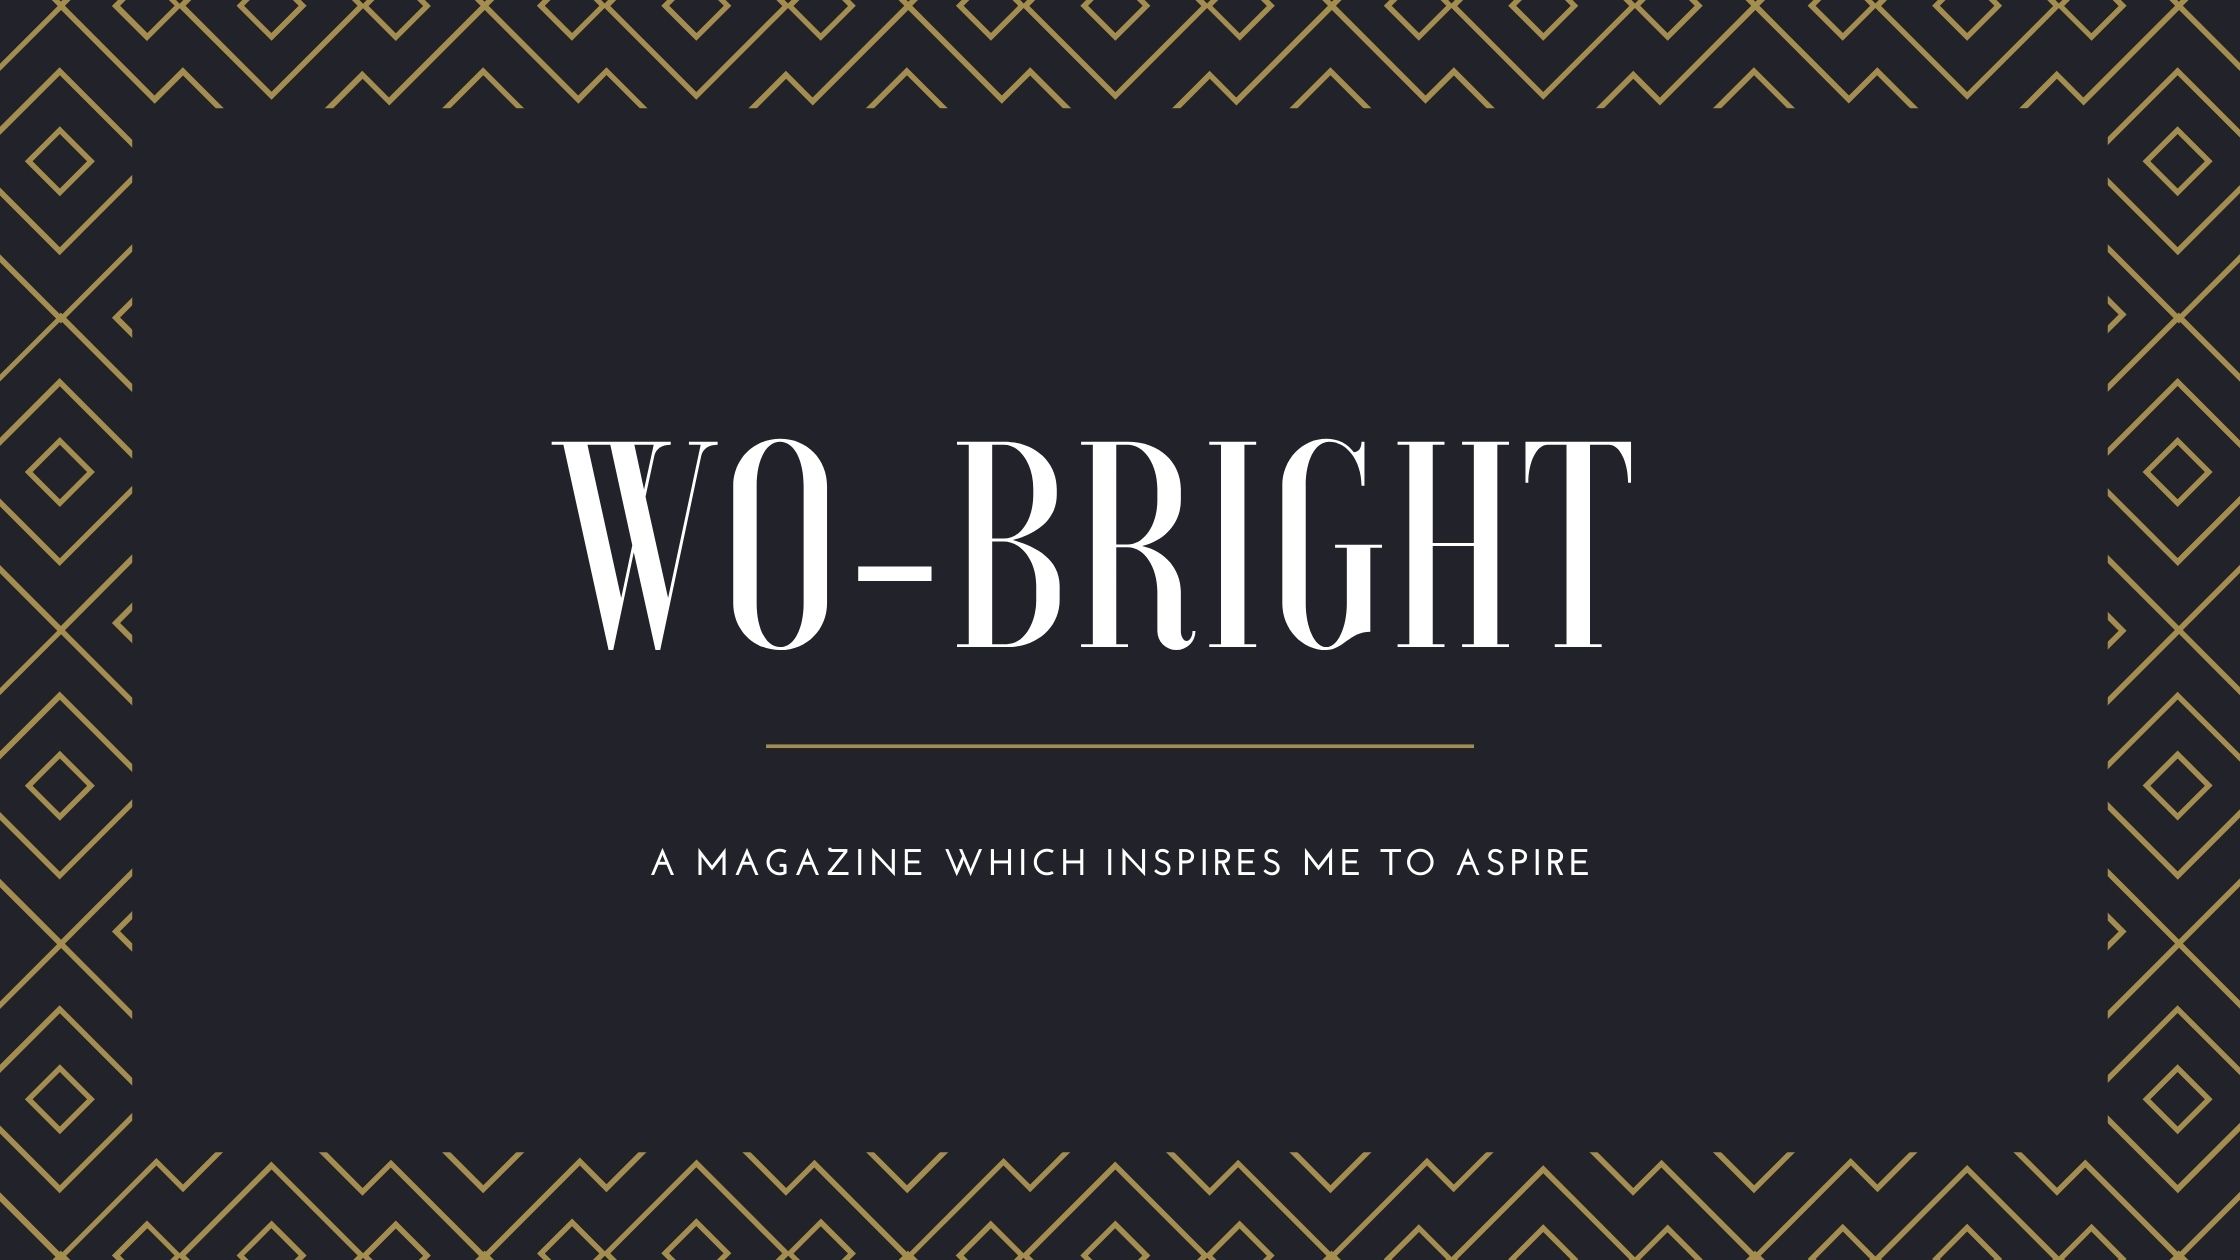 WO-BRIGHT Magazine